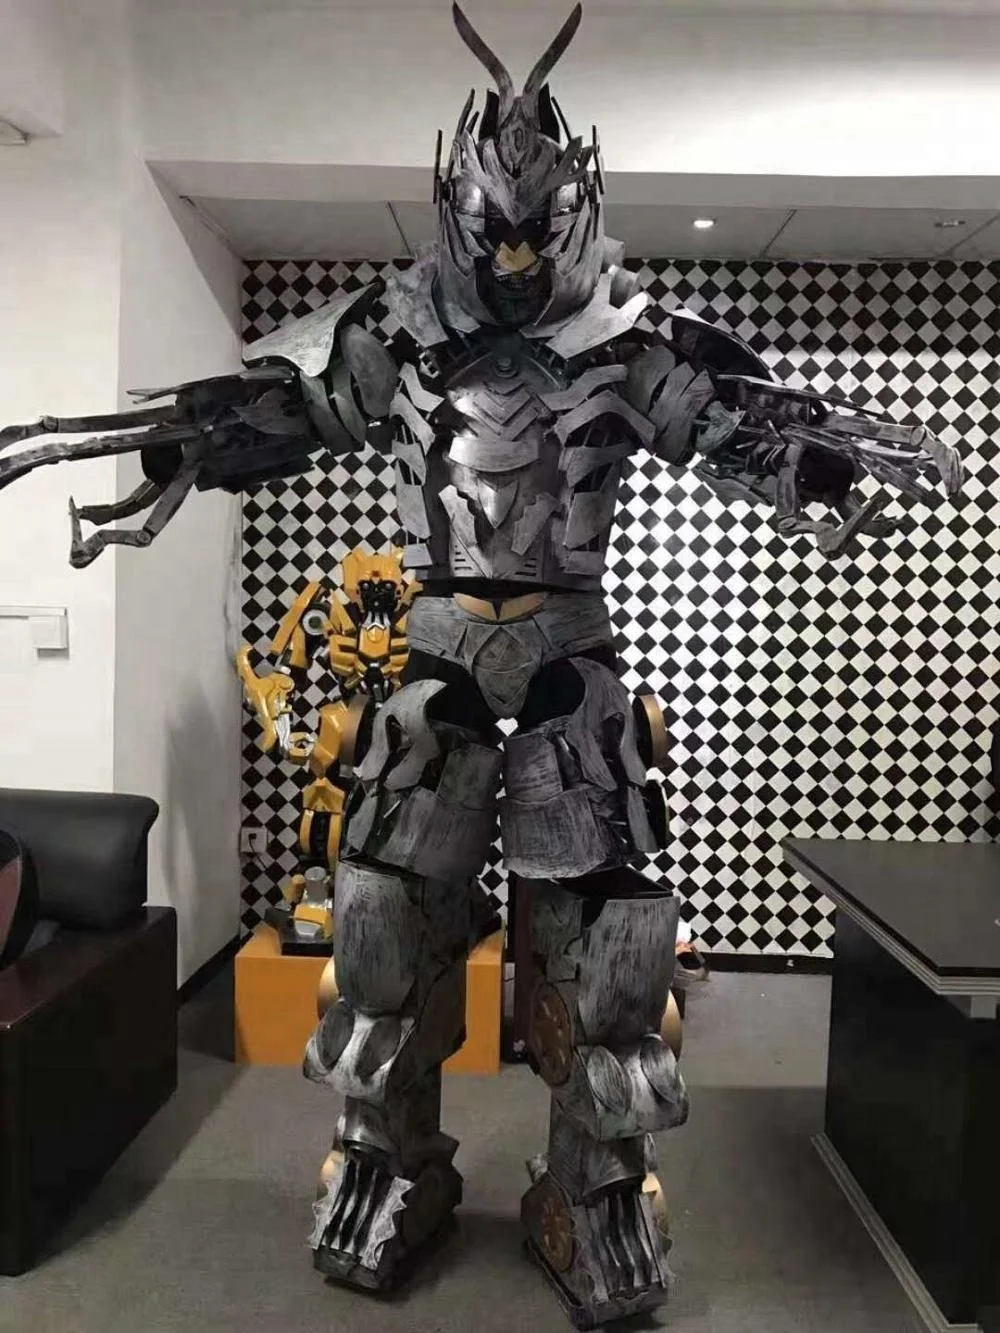 
Human Size Bumble bee Cosplay Dancing Robot Costume 